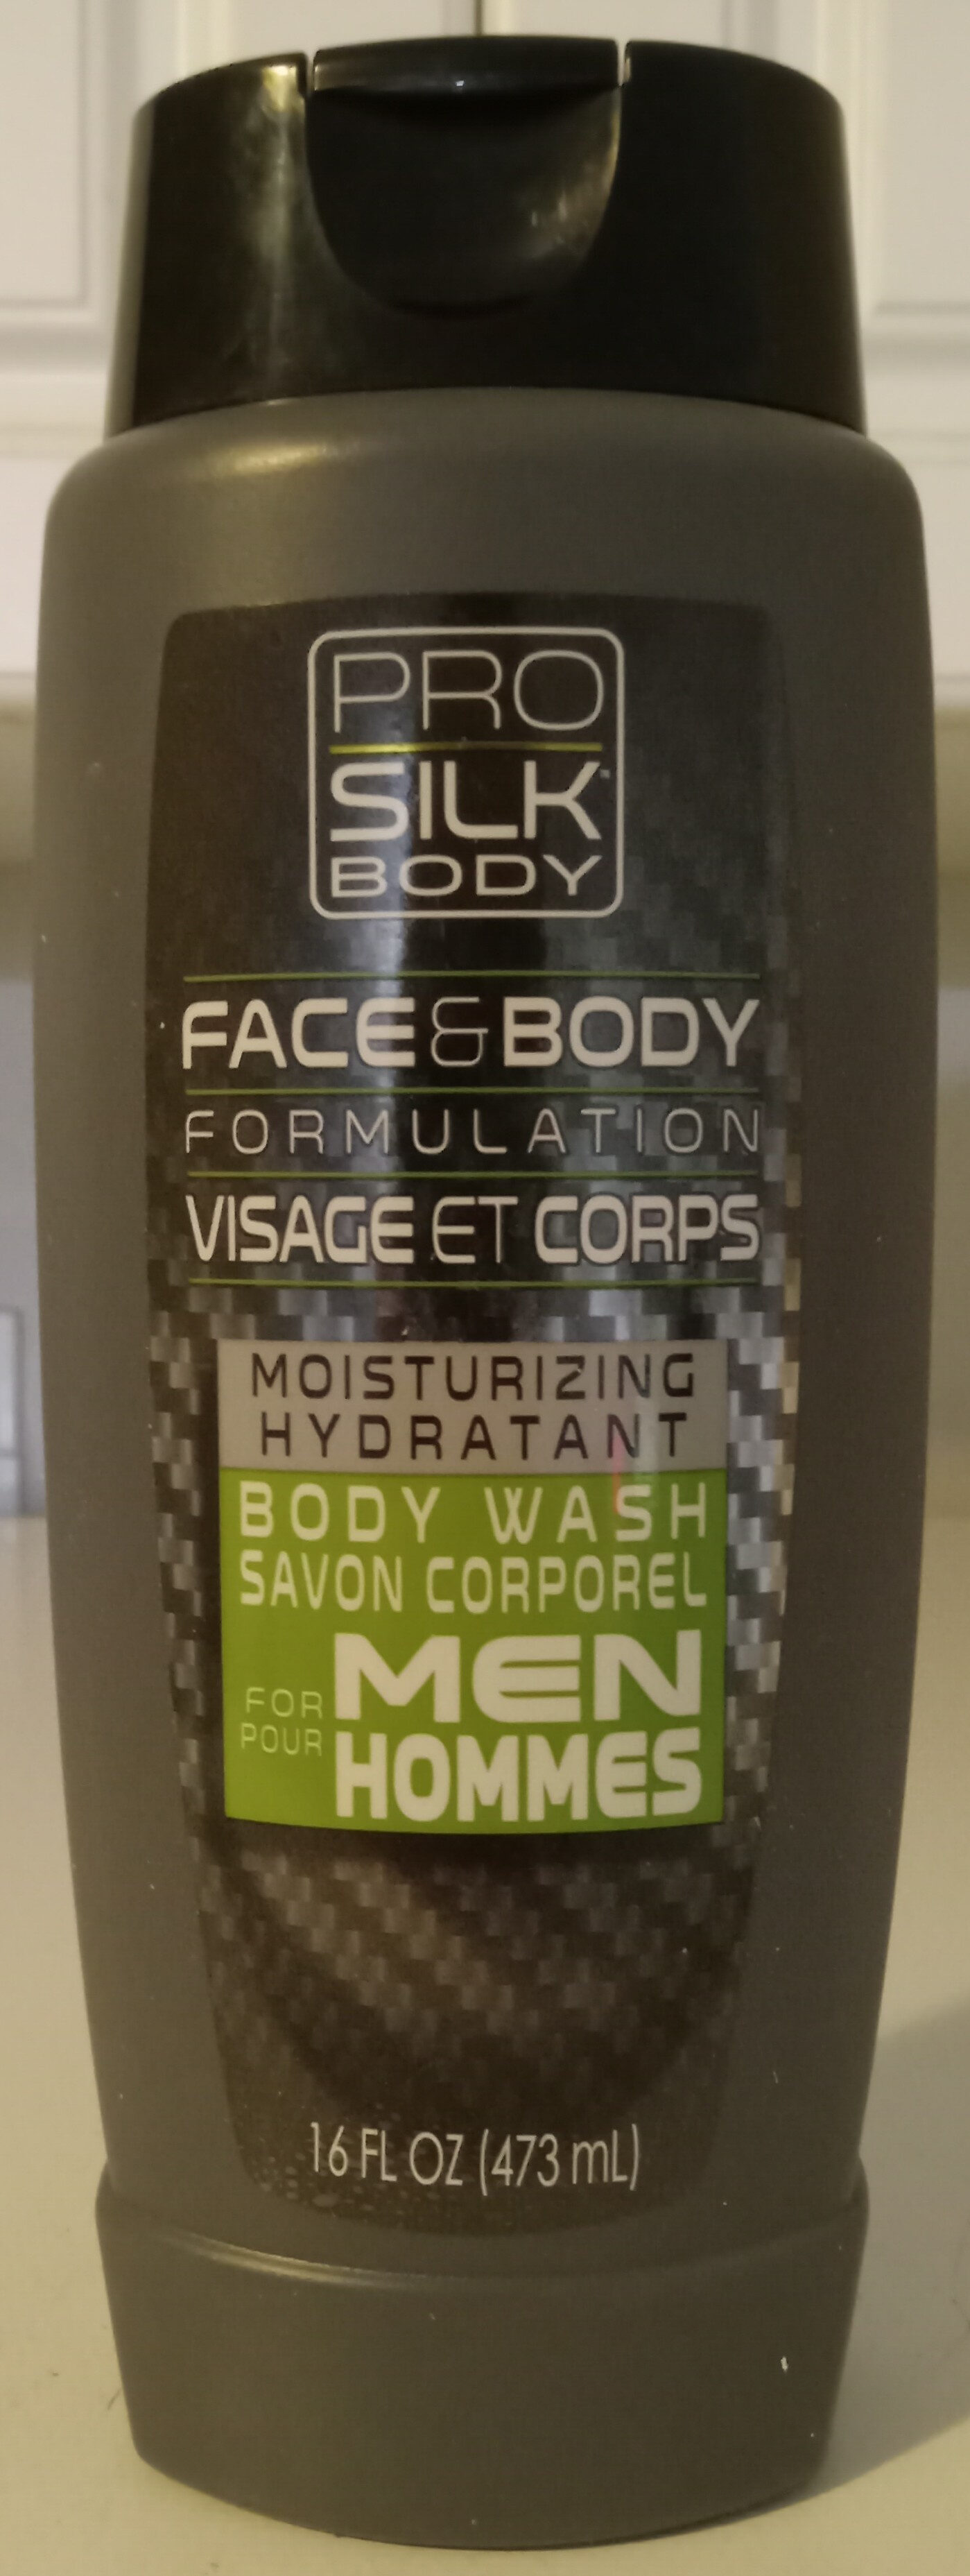 Face & Body Formulation Moisturizing Body Wash for Men - Product - en